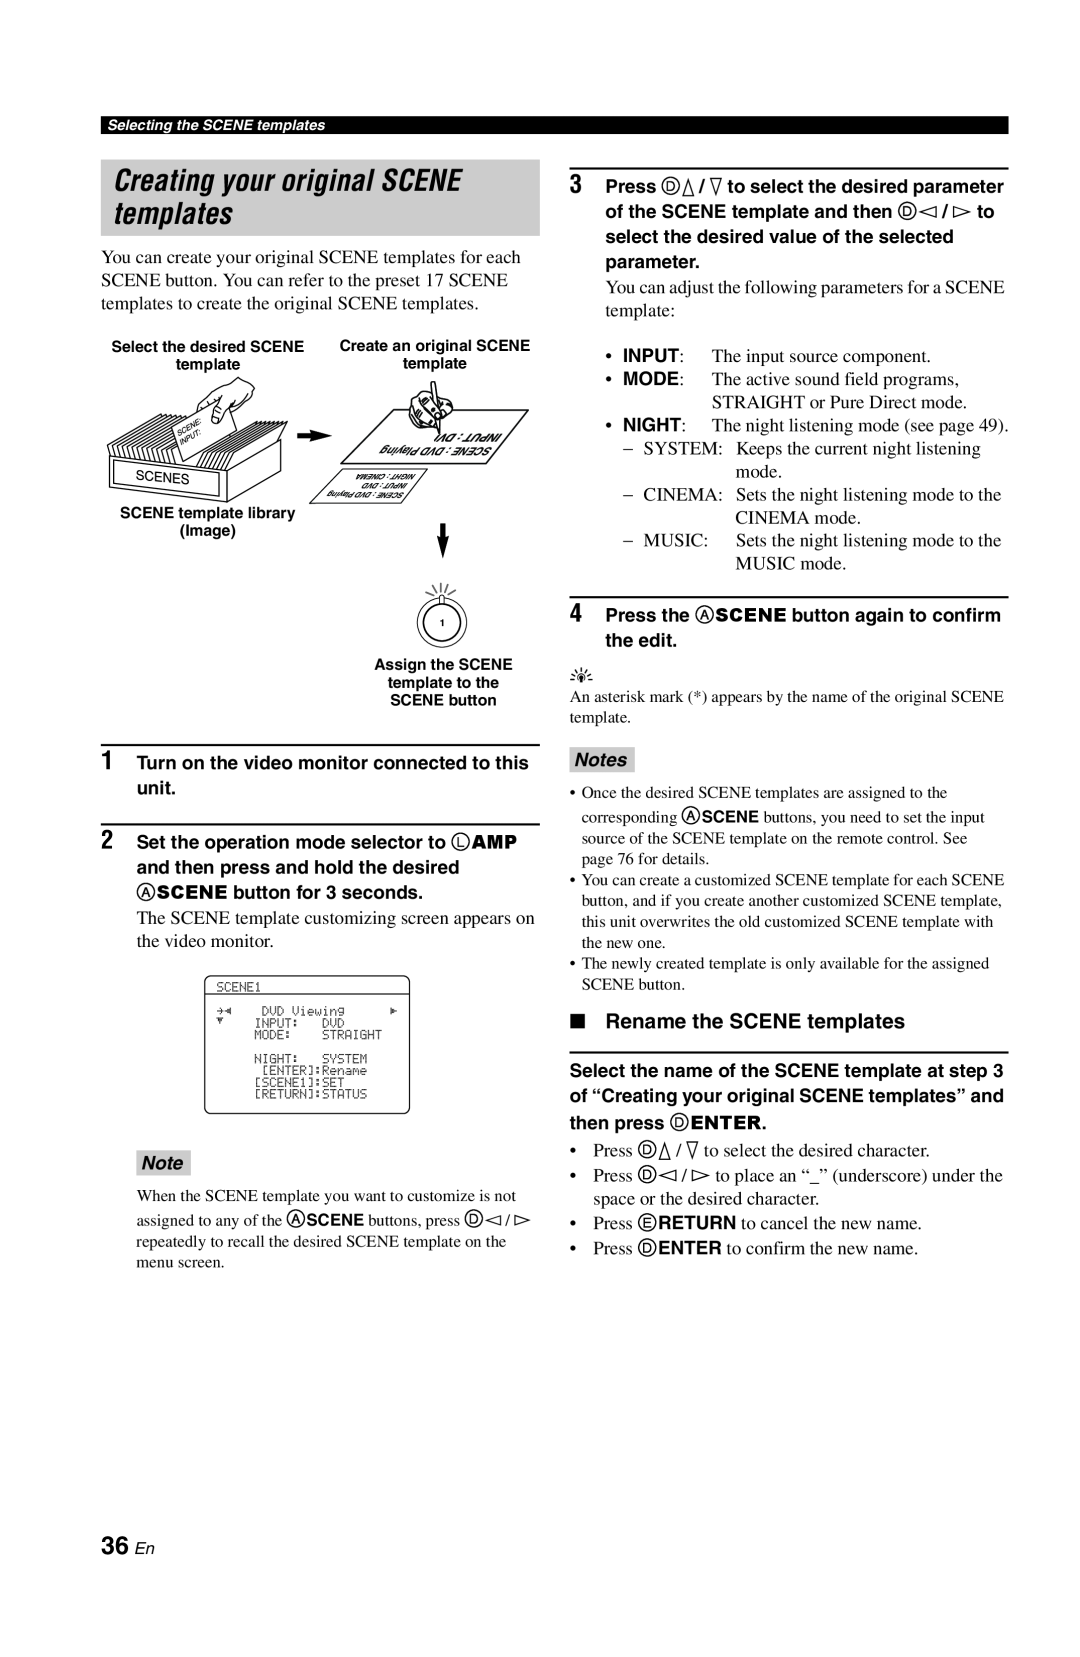 Yamaha DSP-AX861SE owner manual Creating your original SCENE templates, 36 En, Rename the SCENE templates, Notes 